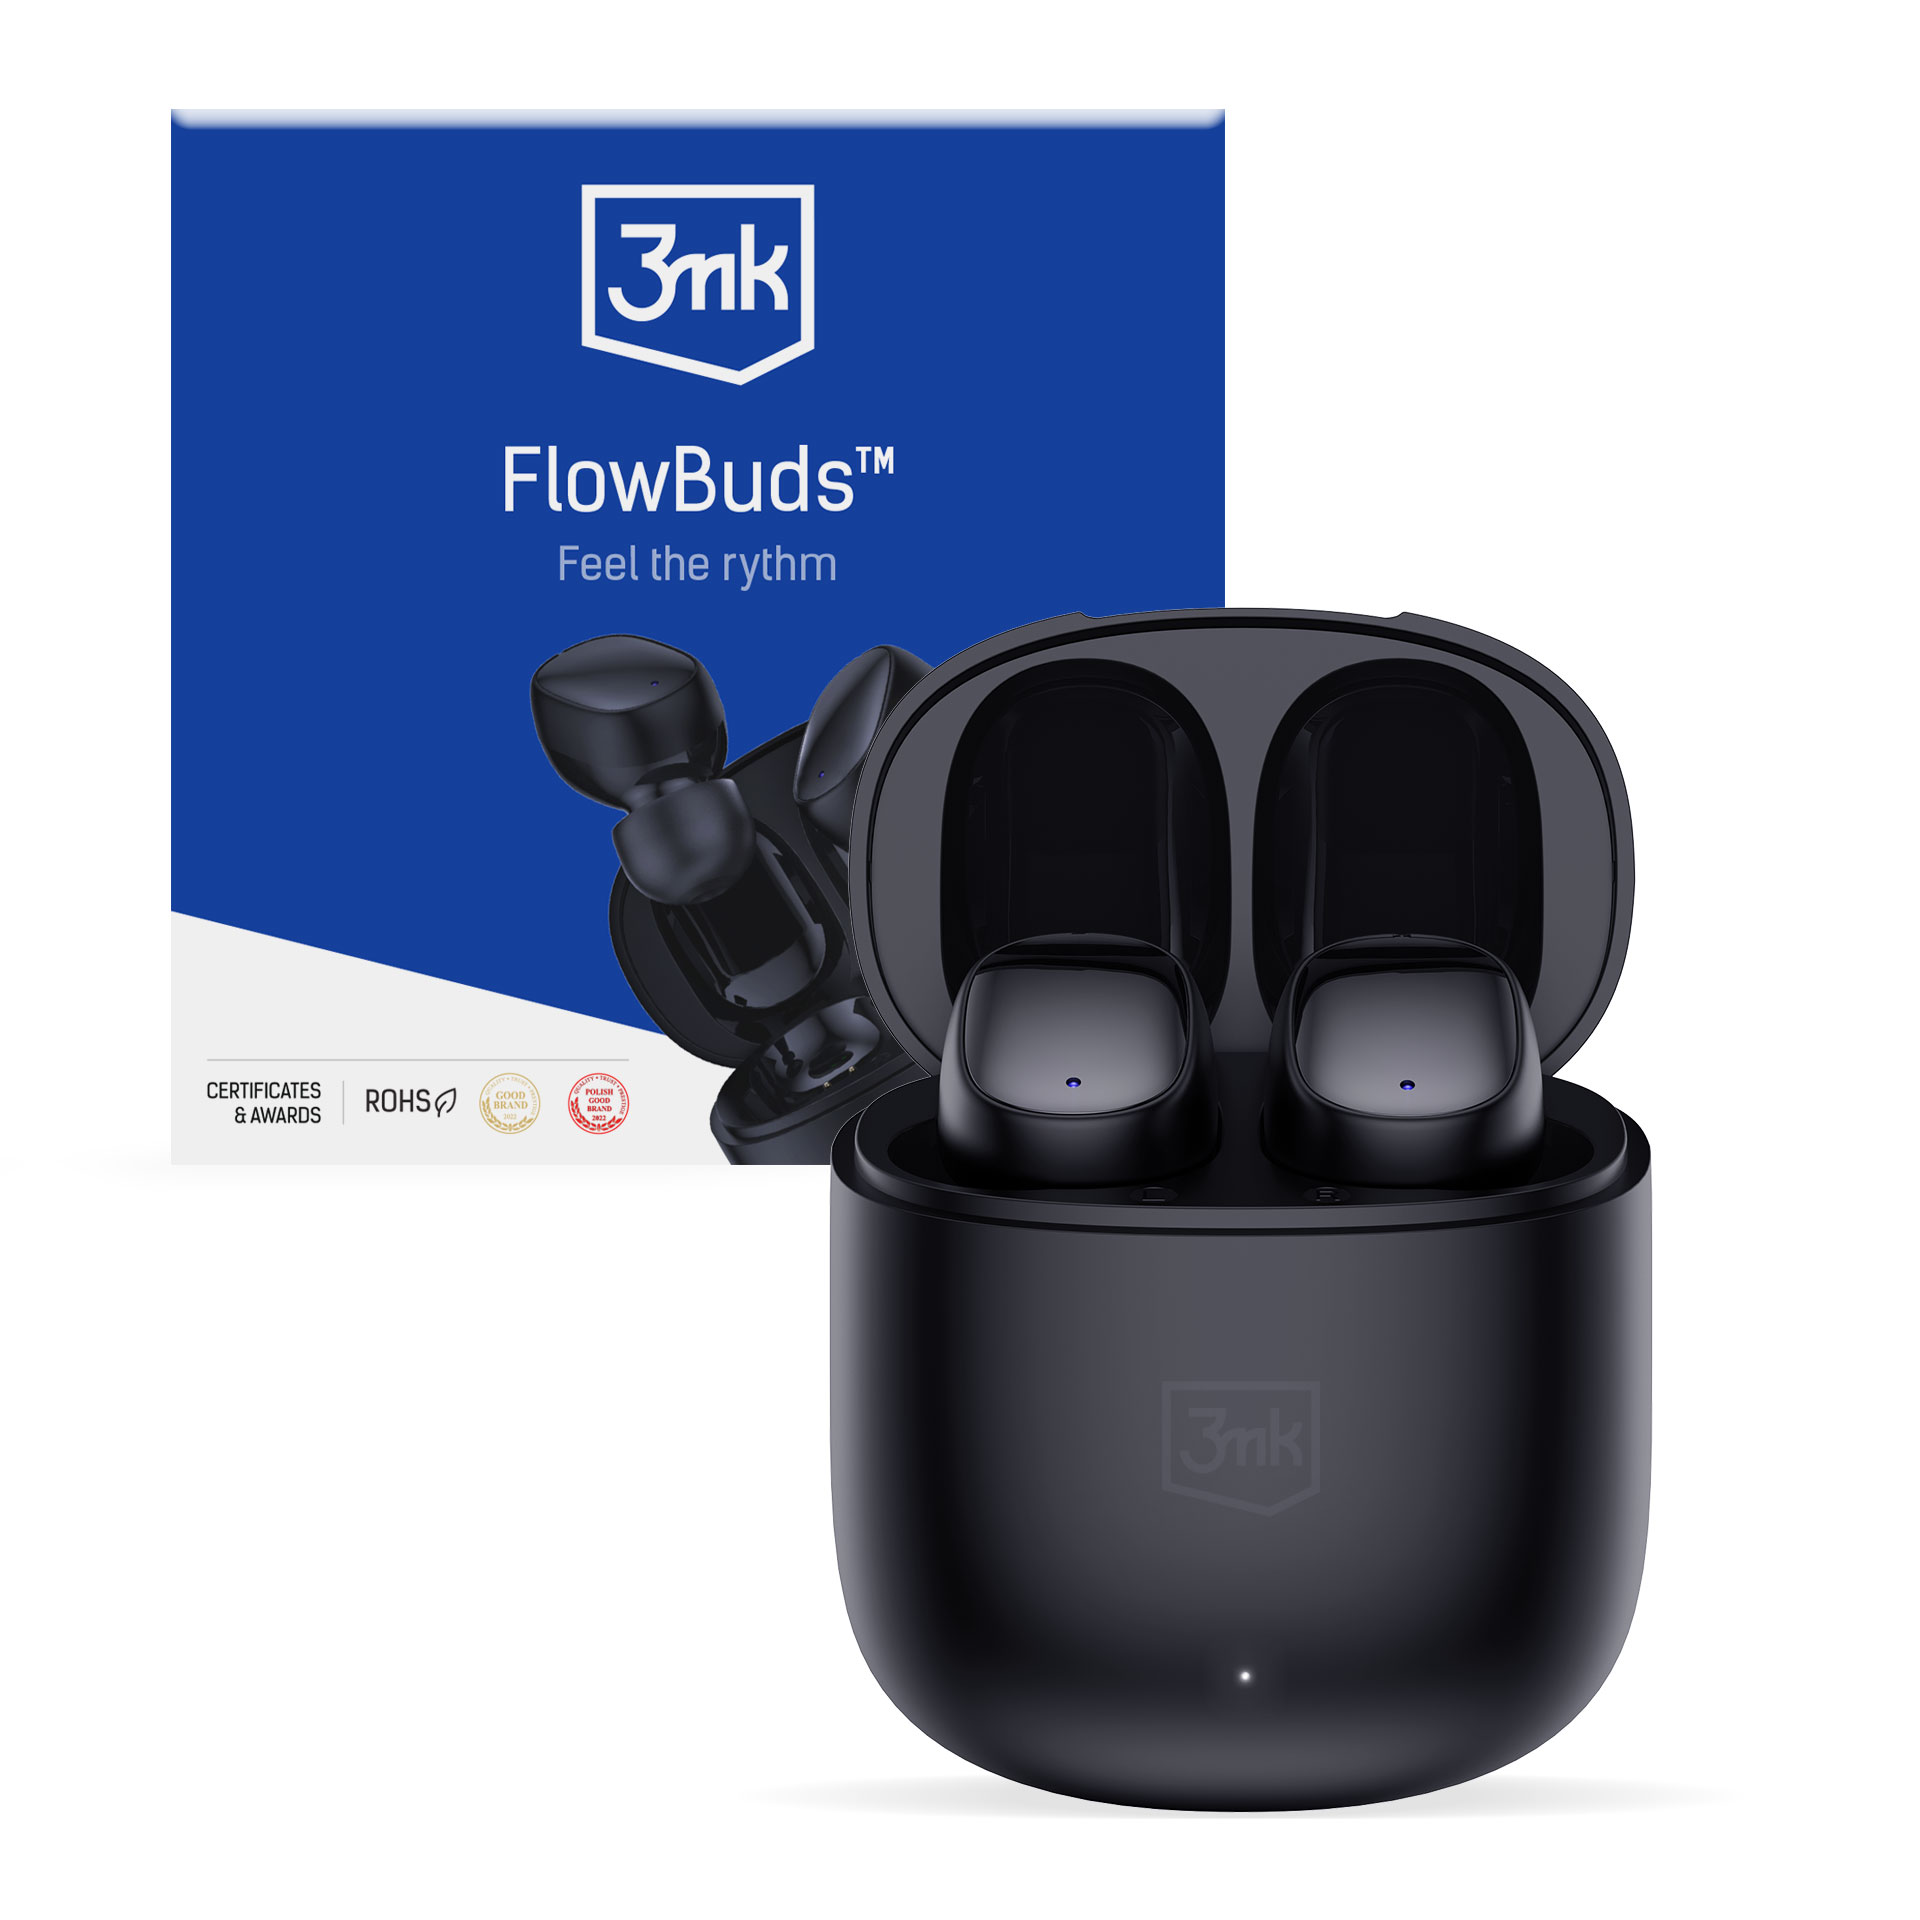 Bluetooth sluchátka FlowBuds 3mk černá barva